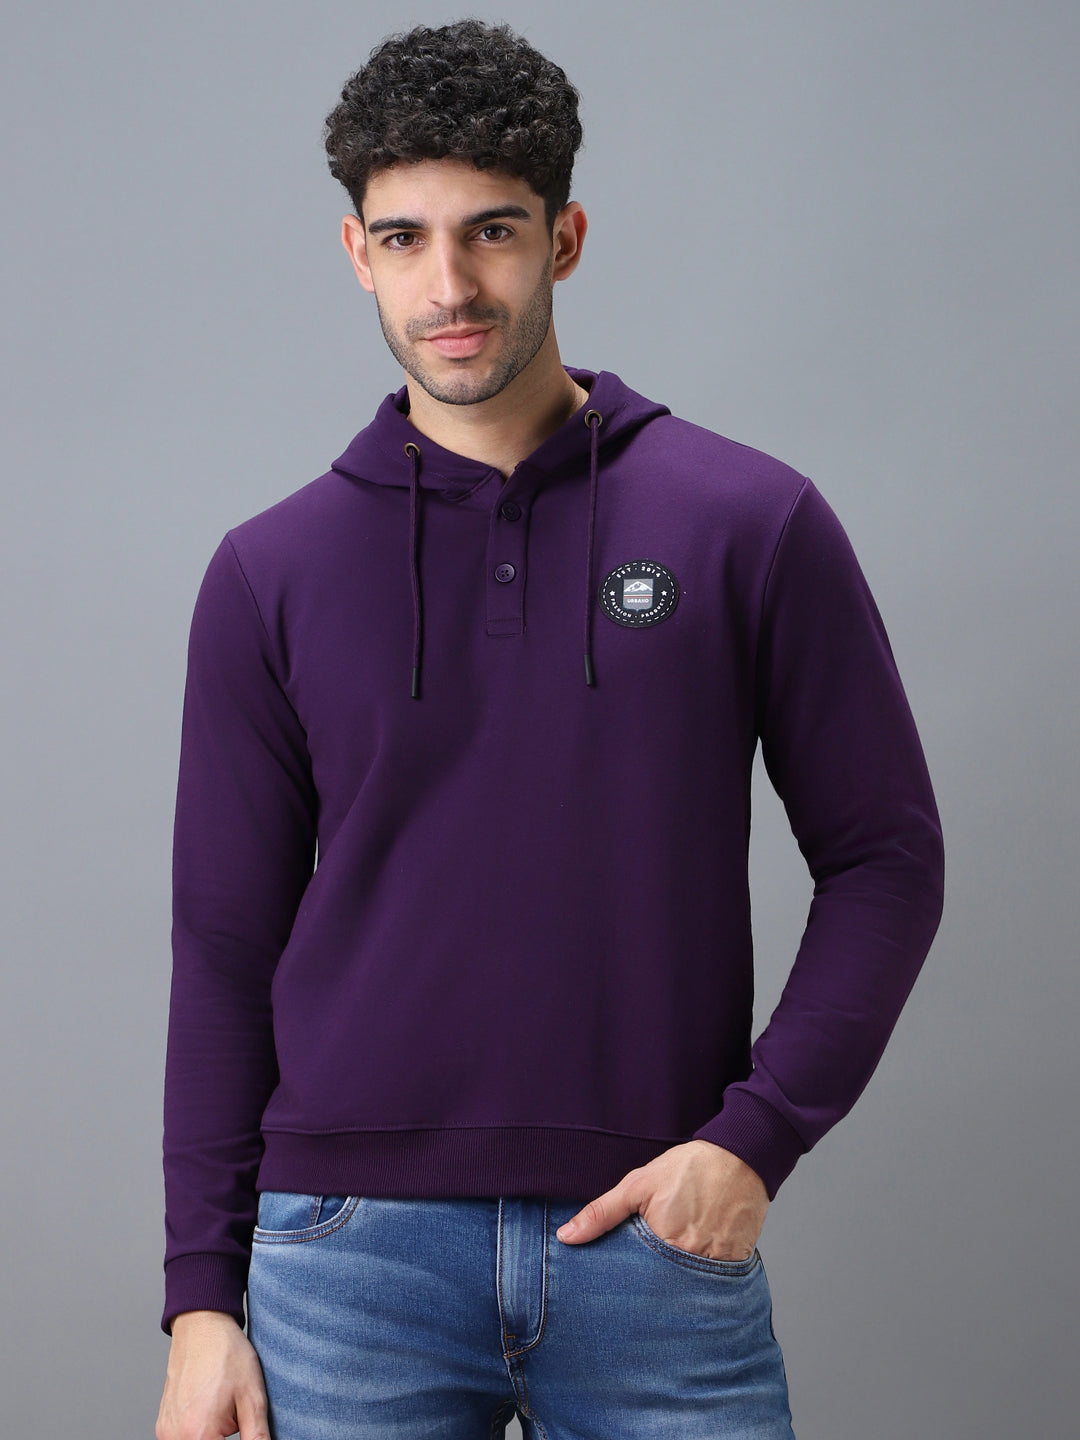 Men's Purple Cotton Solid Button Hooded Neck Sweatshirt